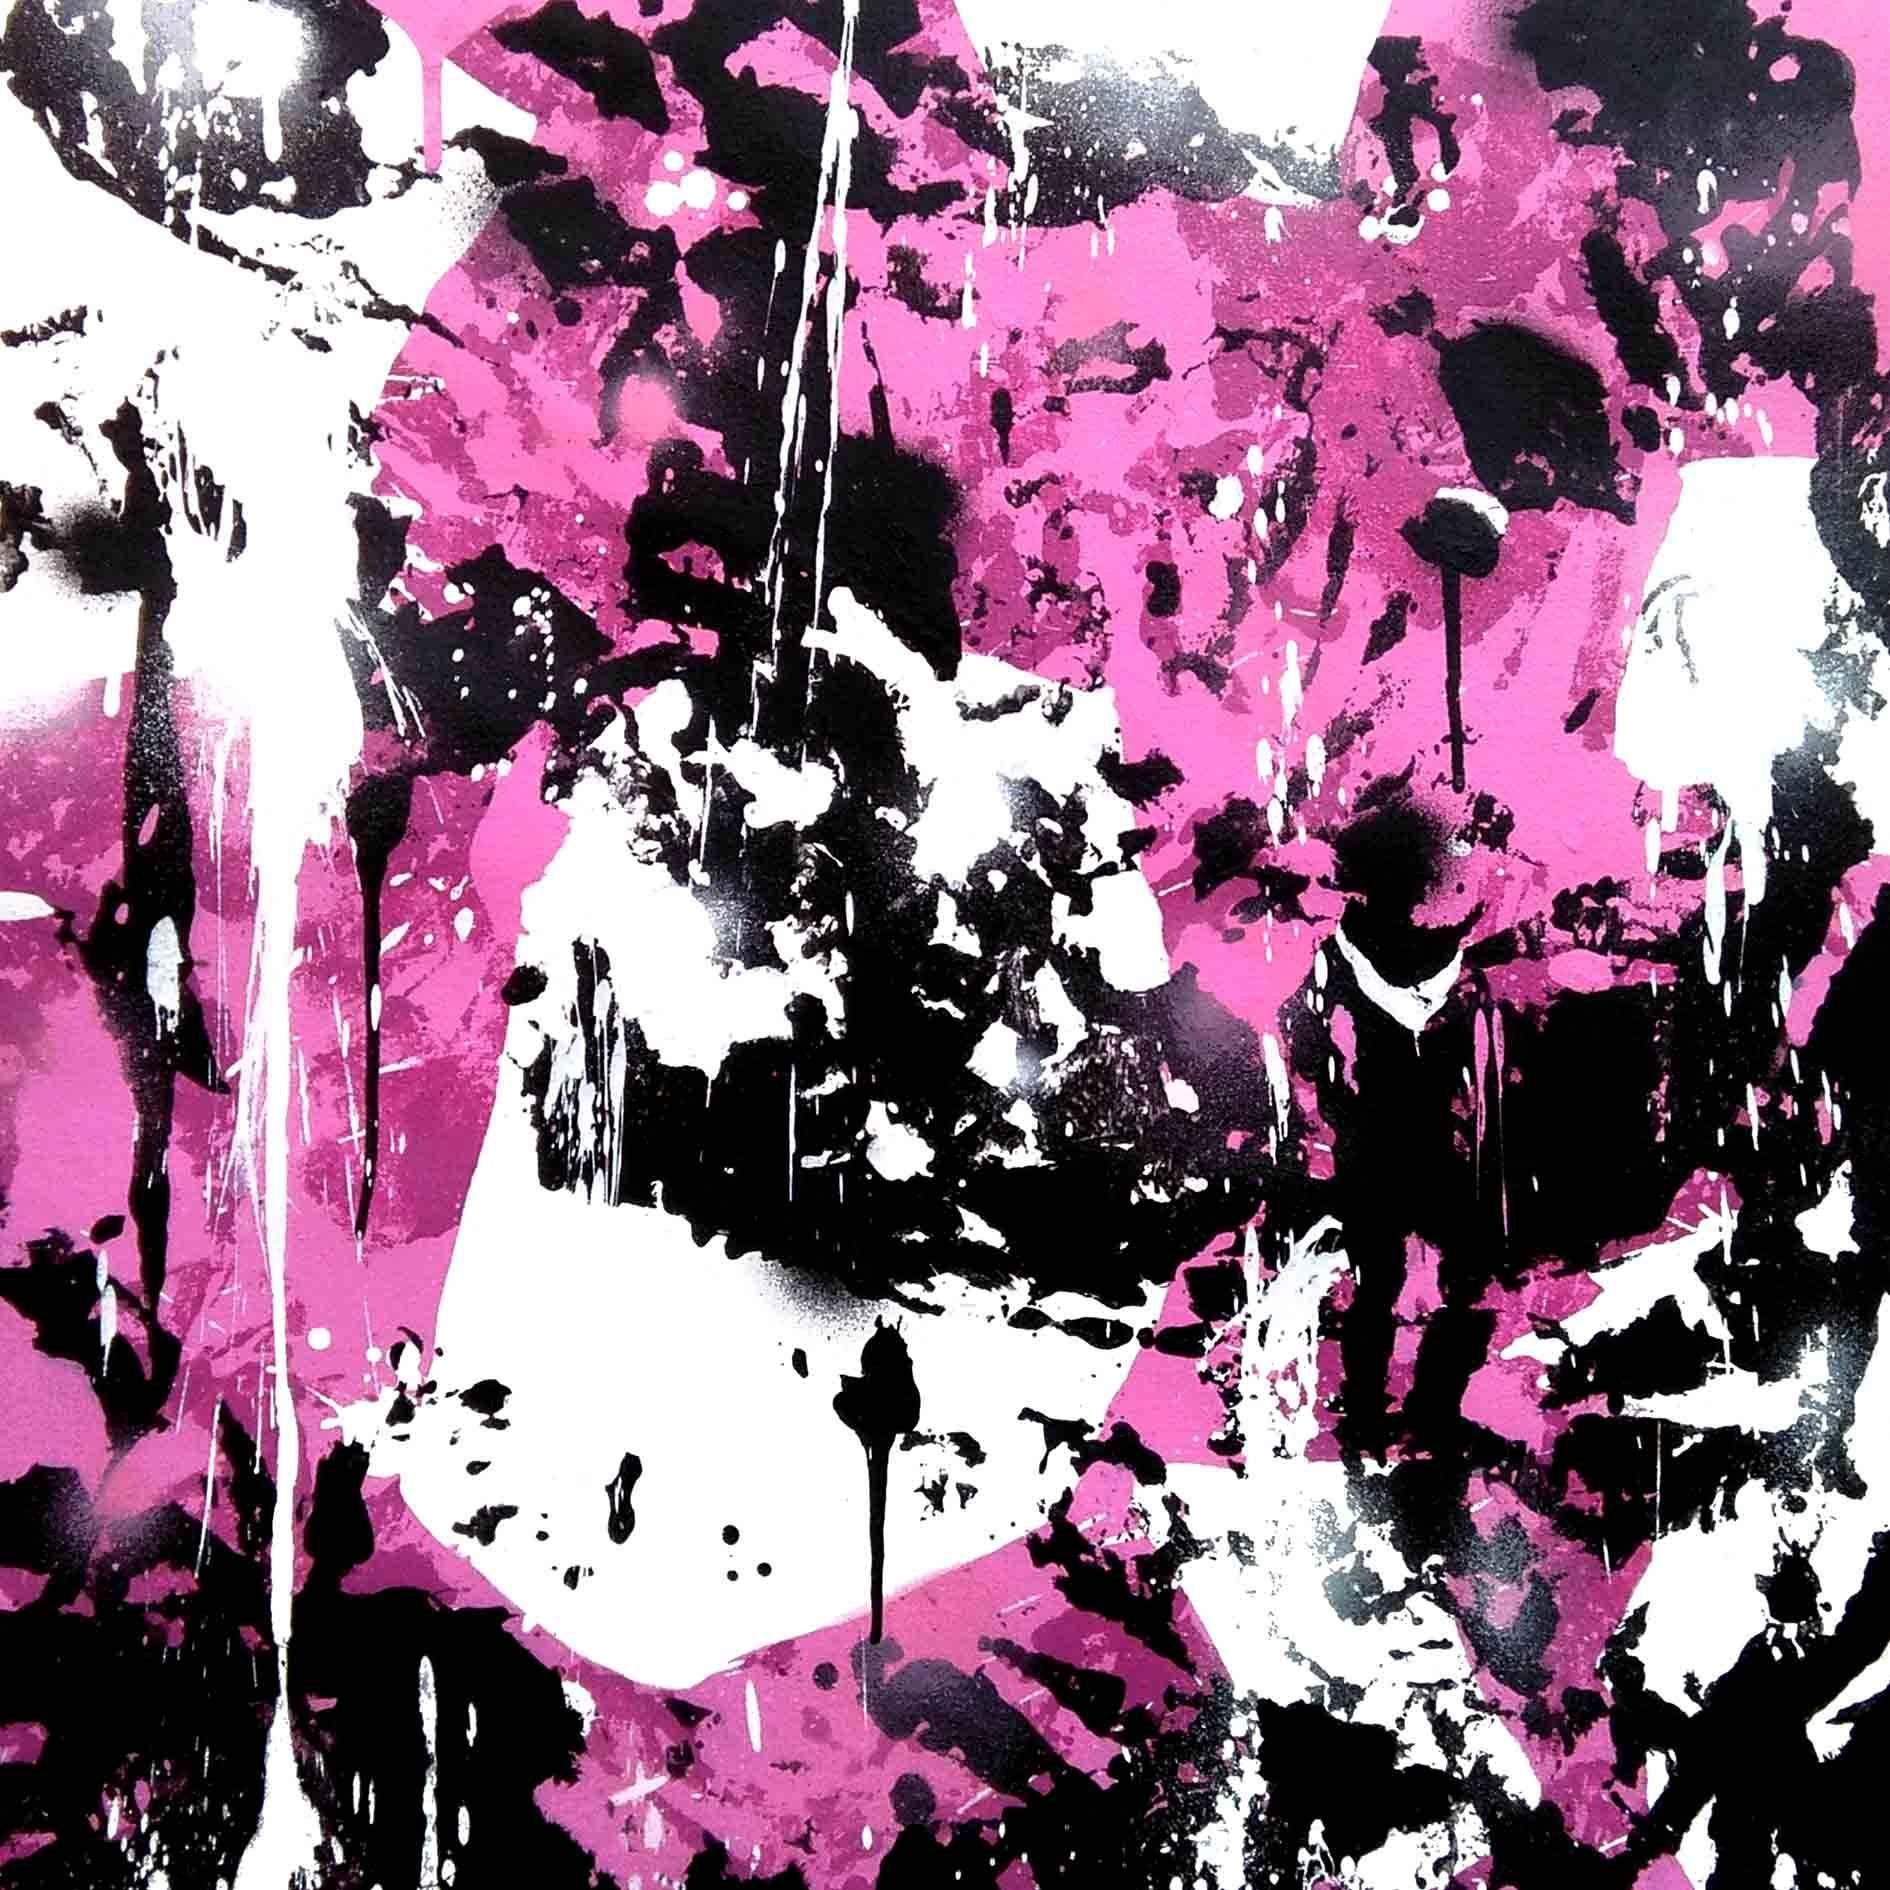 Fasim (Germán Bel) Abstract Painting - 4 Pareidolic figures on pink background